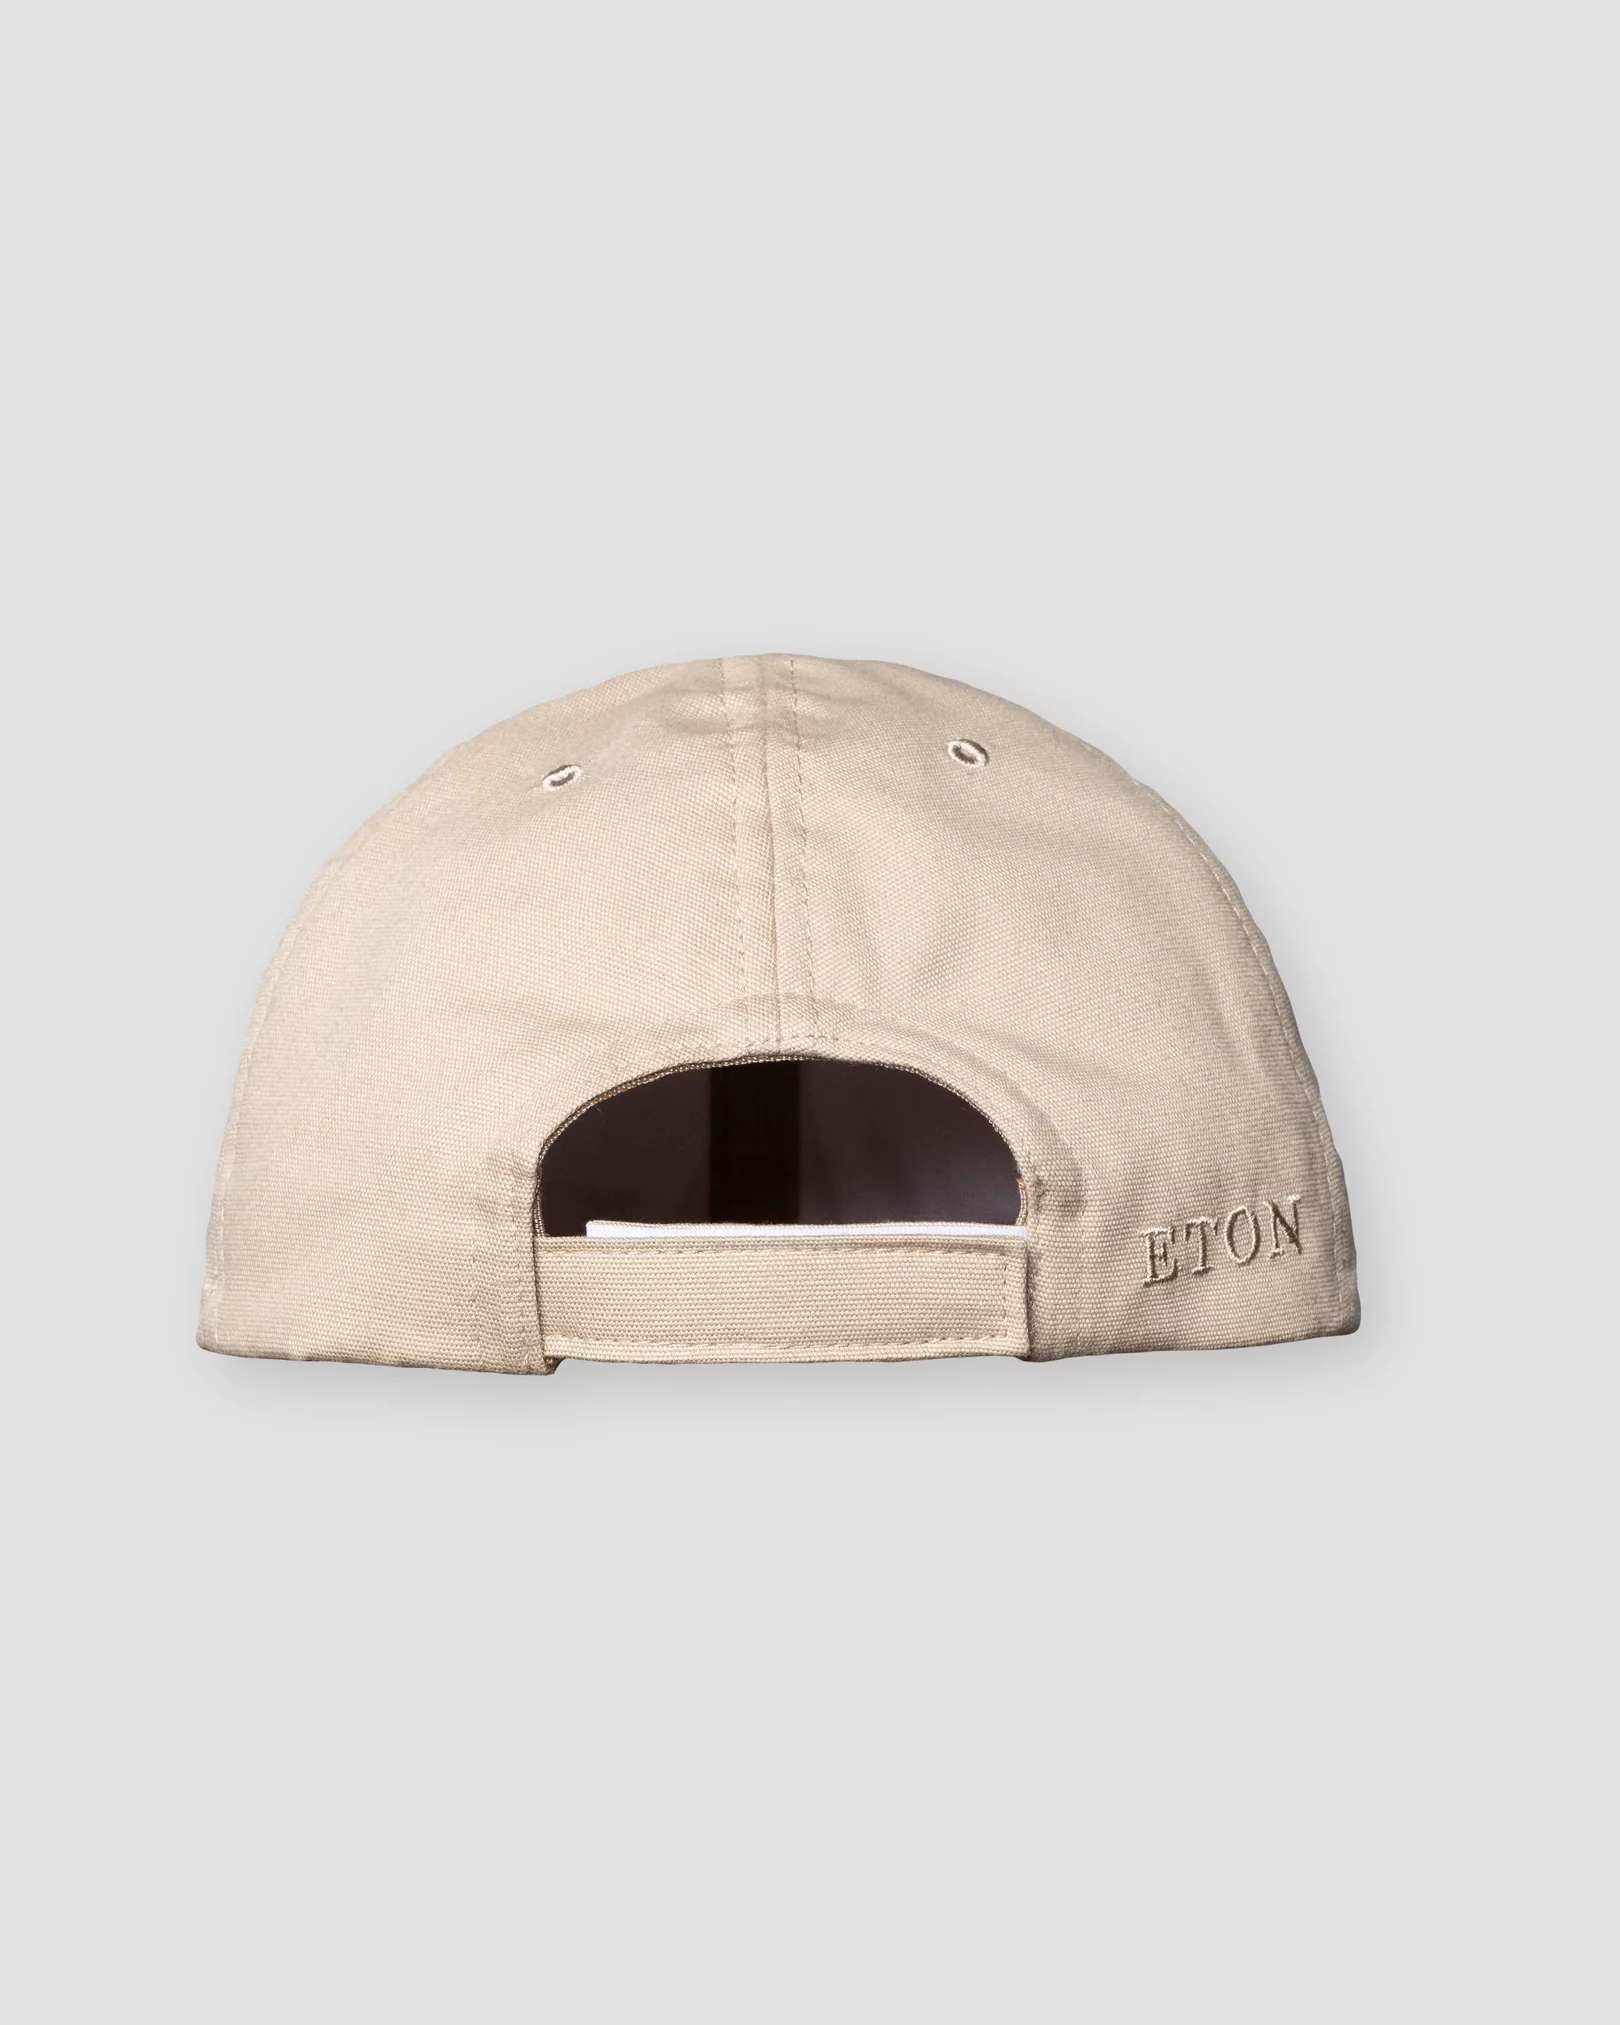 Eton - brown cotton baseball cap